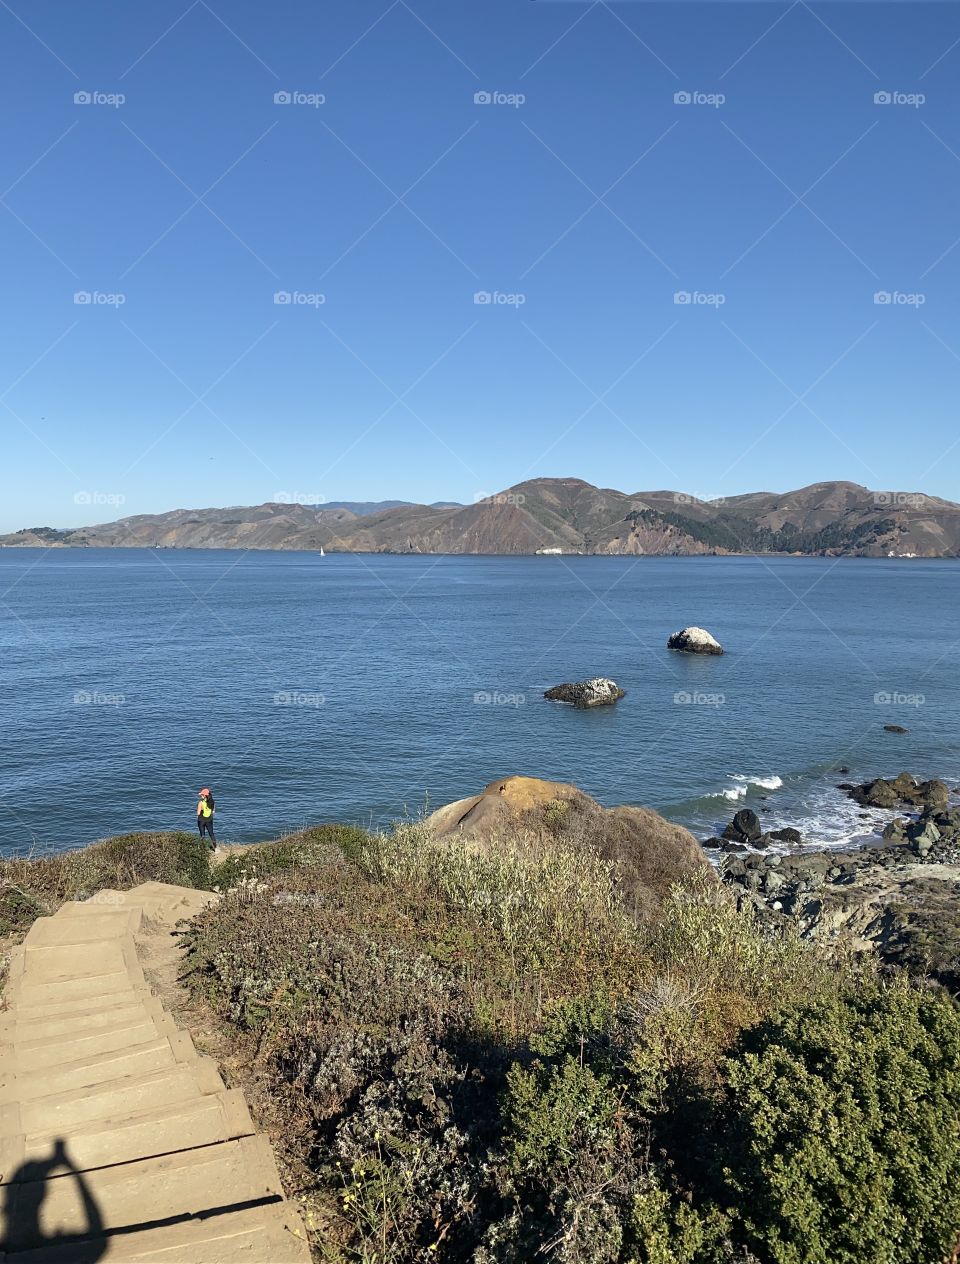 San Francisco hike